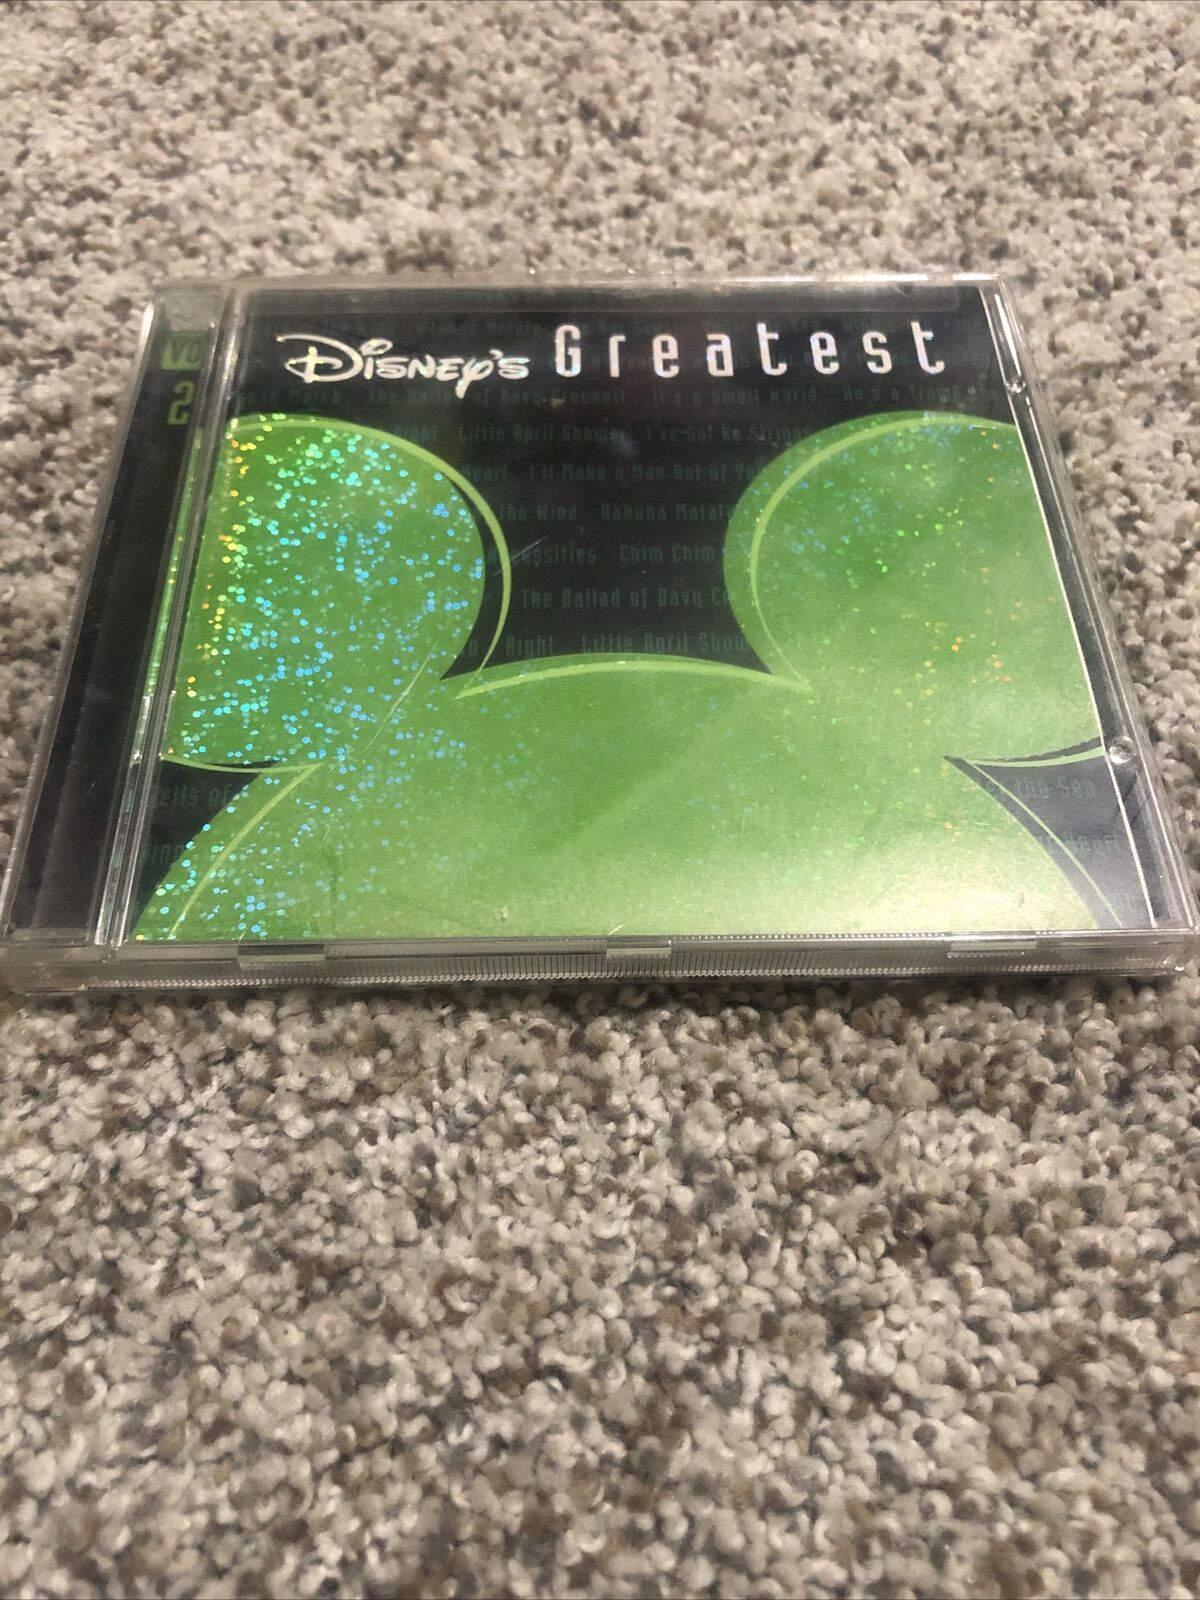 Disney's Greatest, Vol. 2 (Audio CD Jan-2010, Disney)